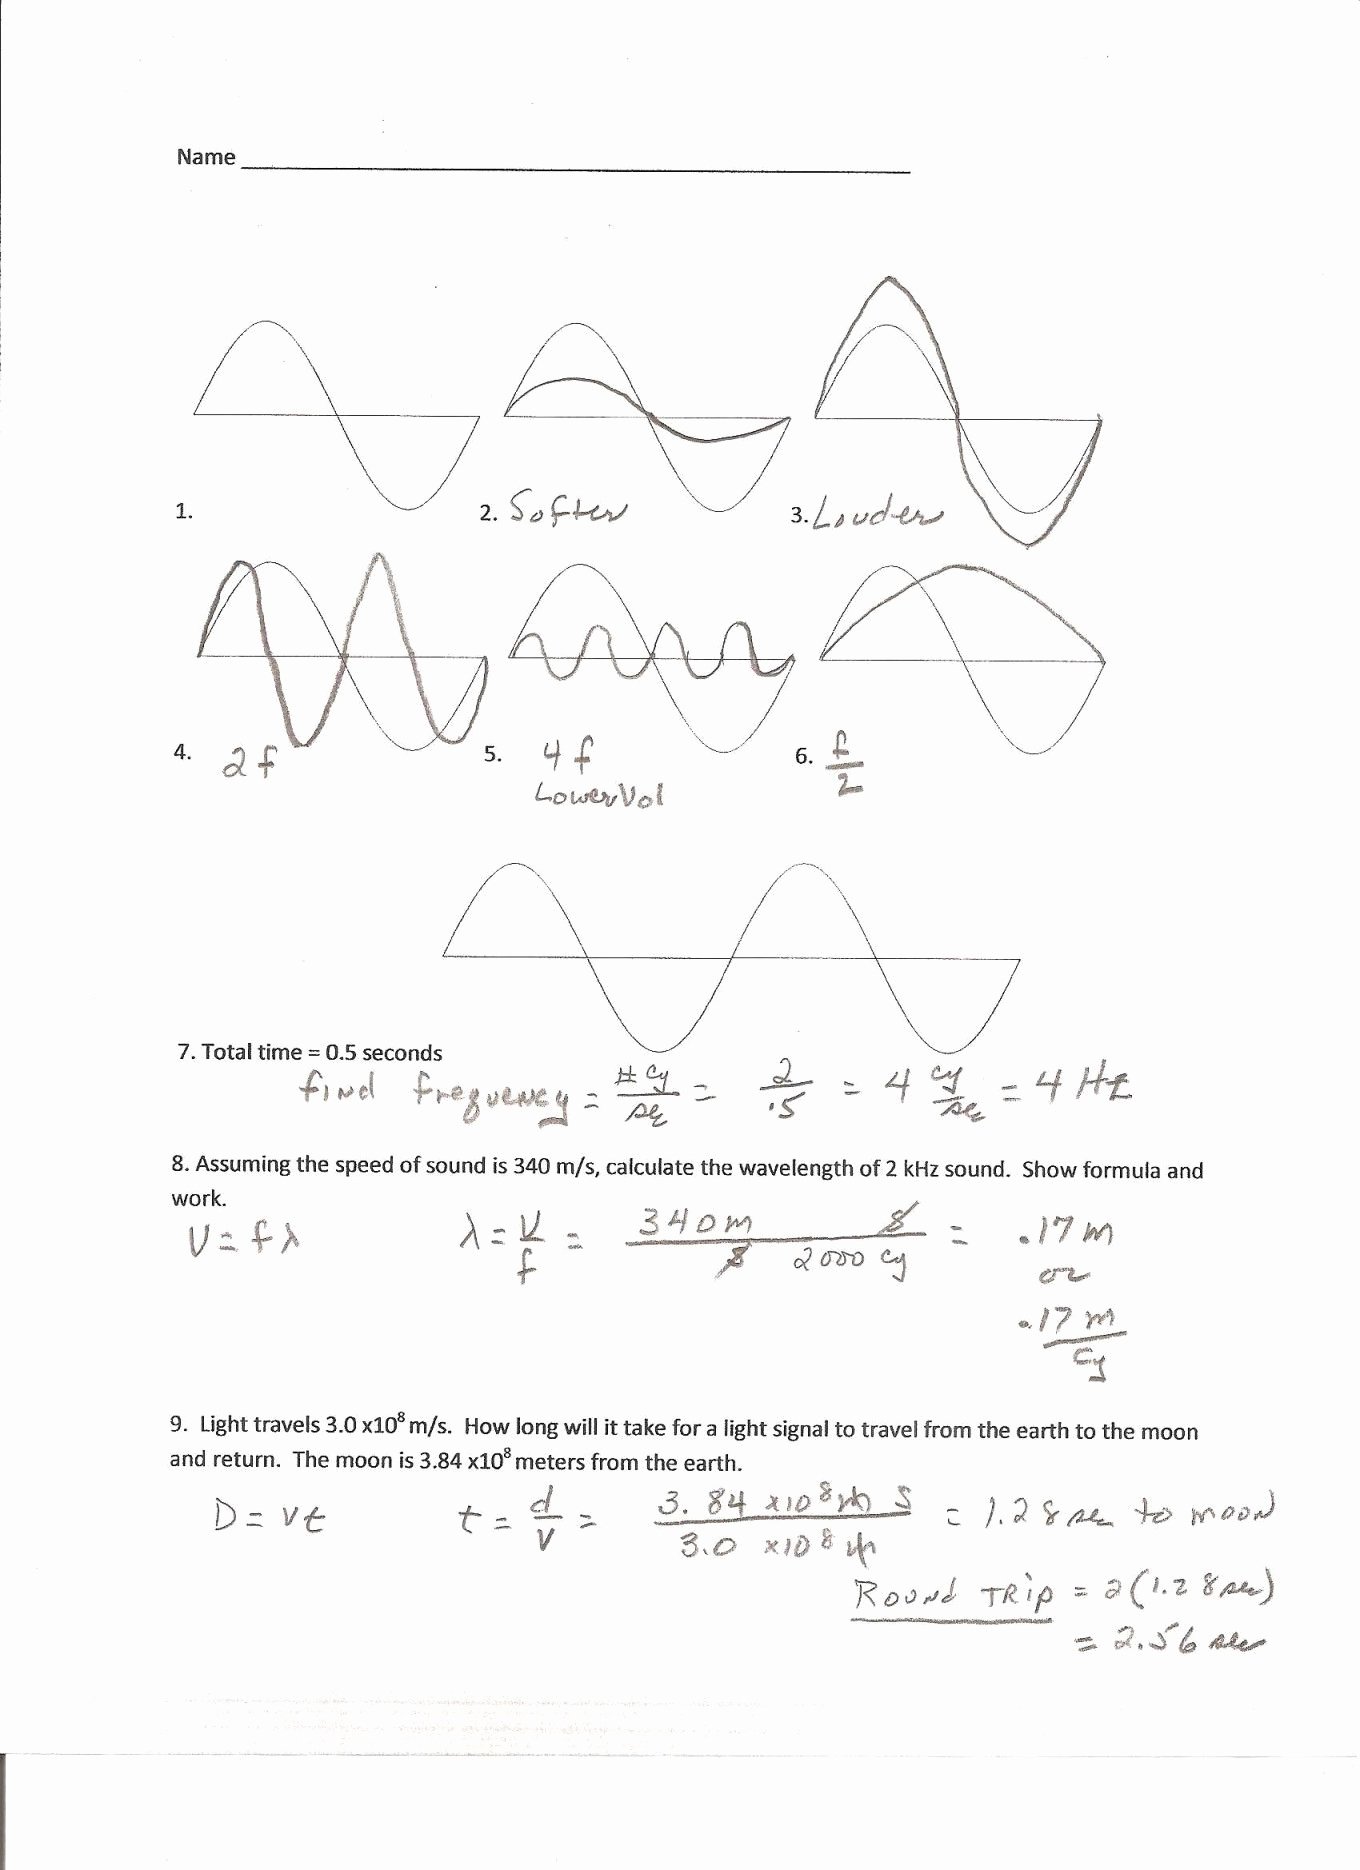 Waves Worksheet 1 Answers Lovely Light Waves Chem Worksheet 5 1 Answer Key